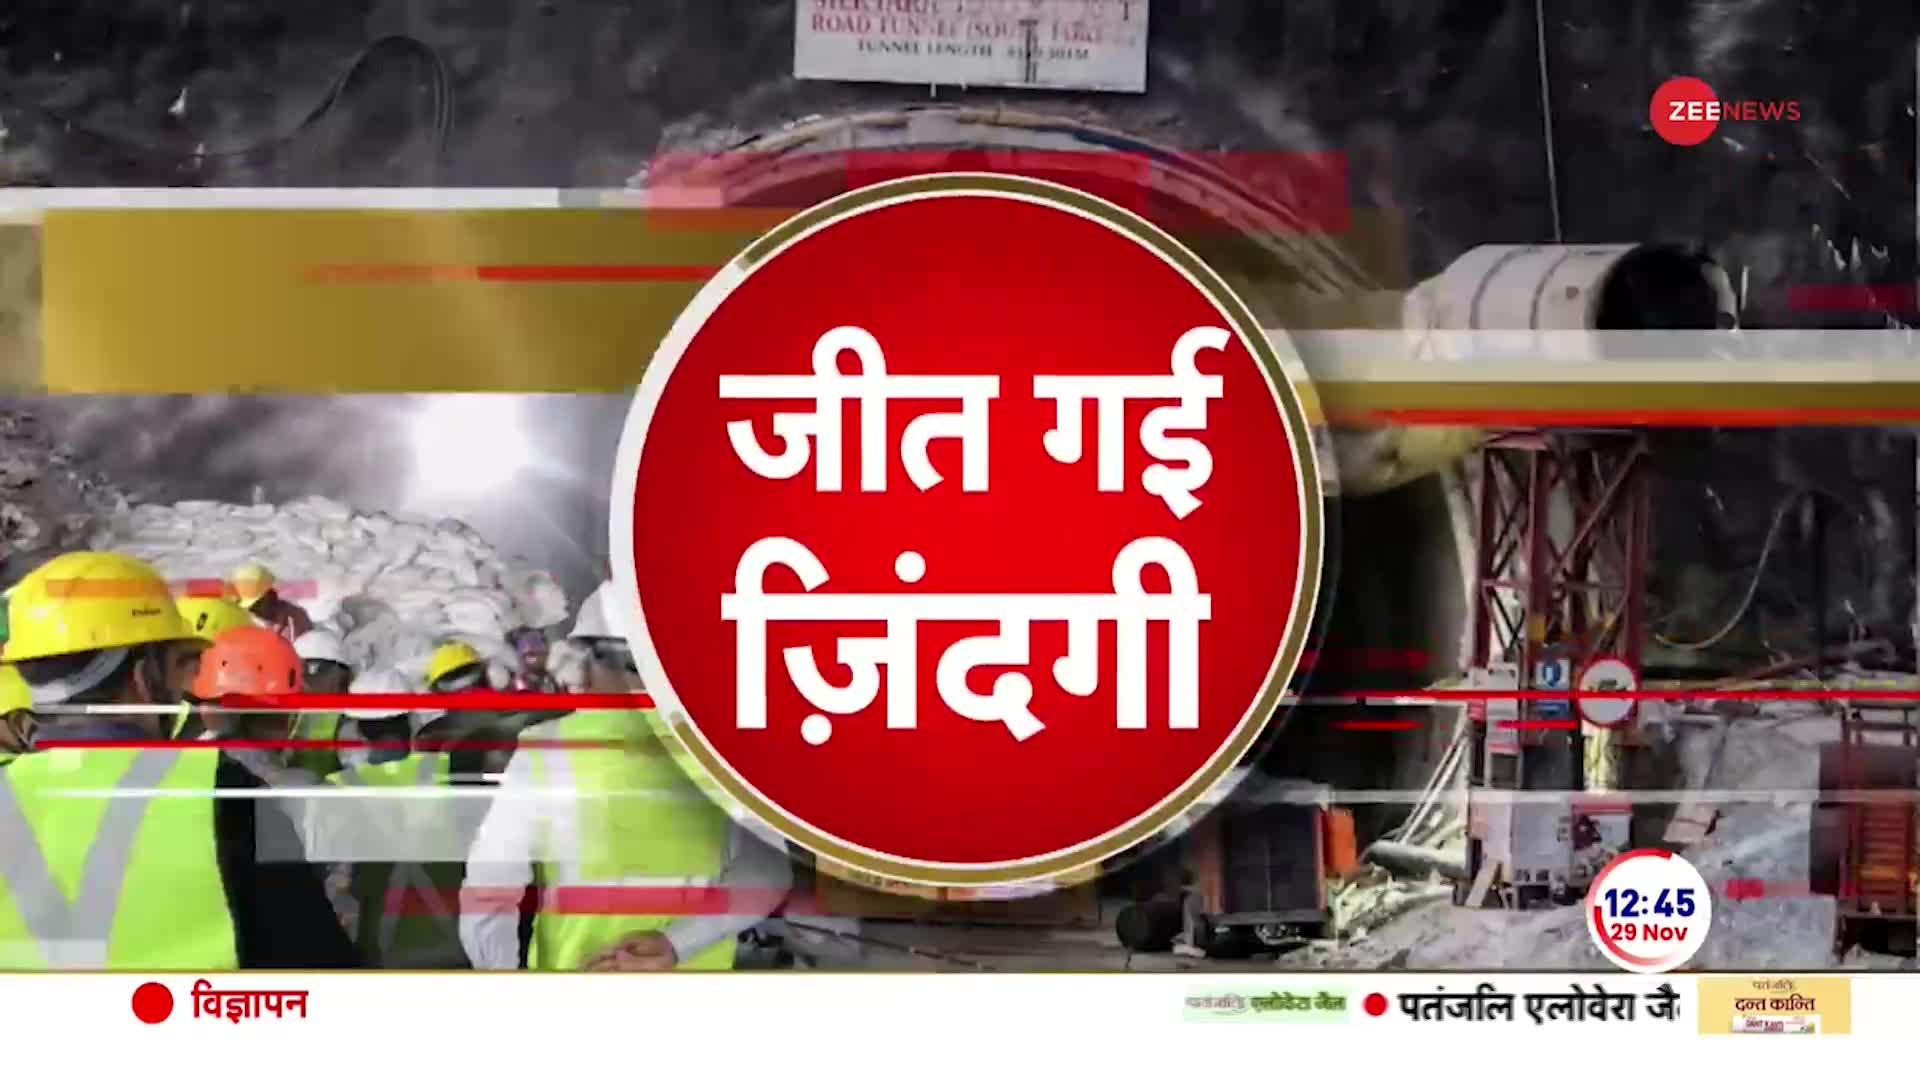 Top 50 News: अभी की 50 बड़ी खबरें Speed News | Non Stop Hindi News | Silkyara | Uttarkashi Tunnel Rescue